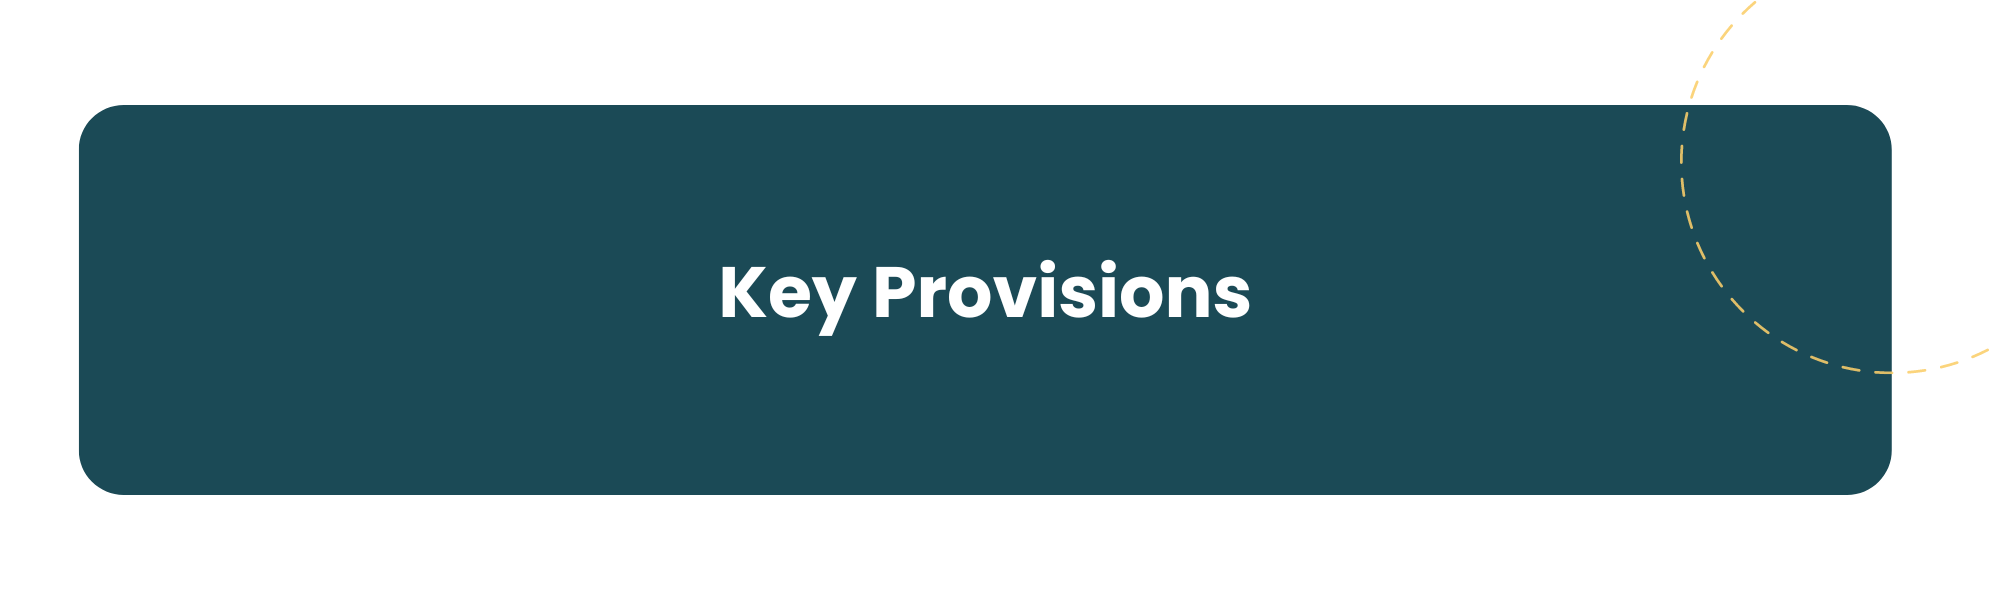 Key Provisions